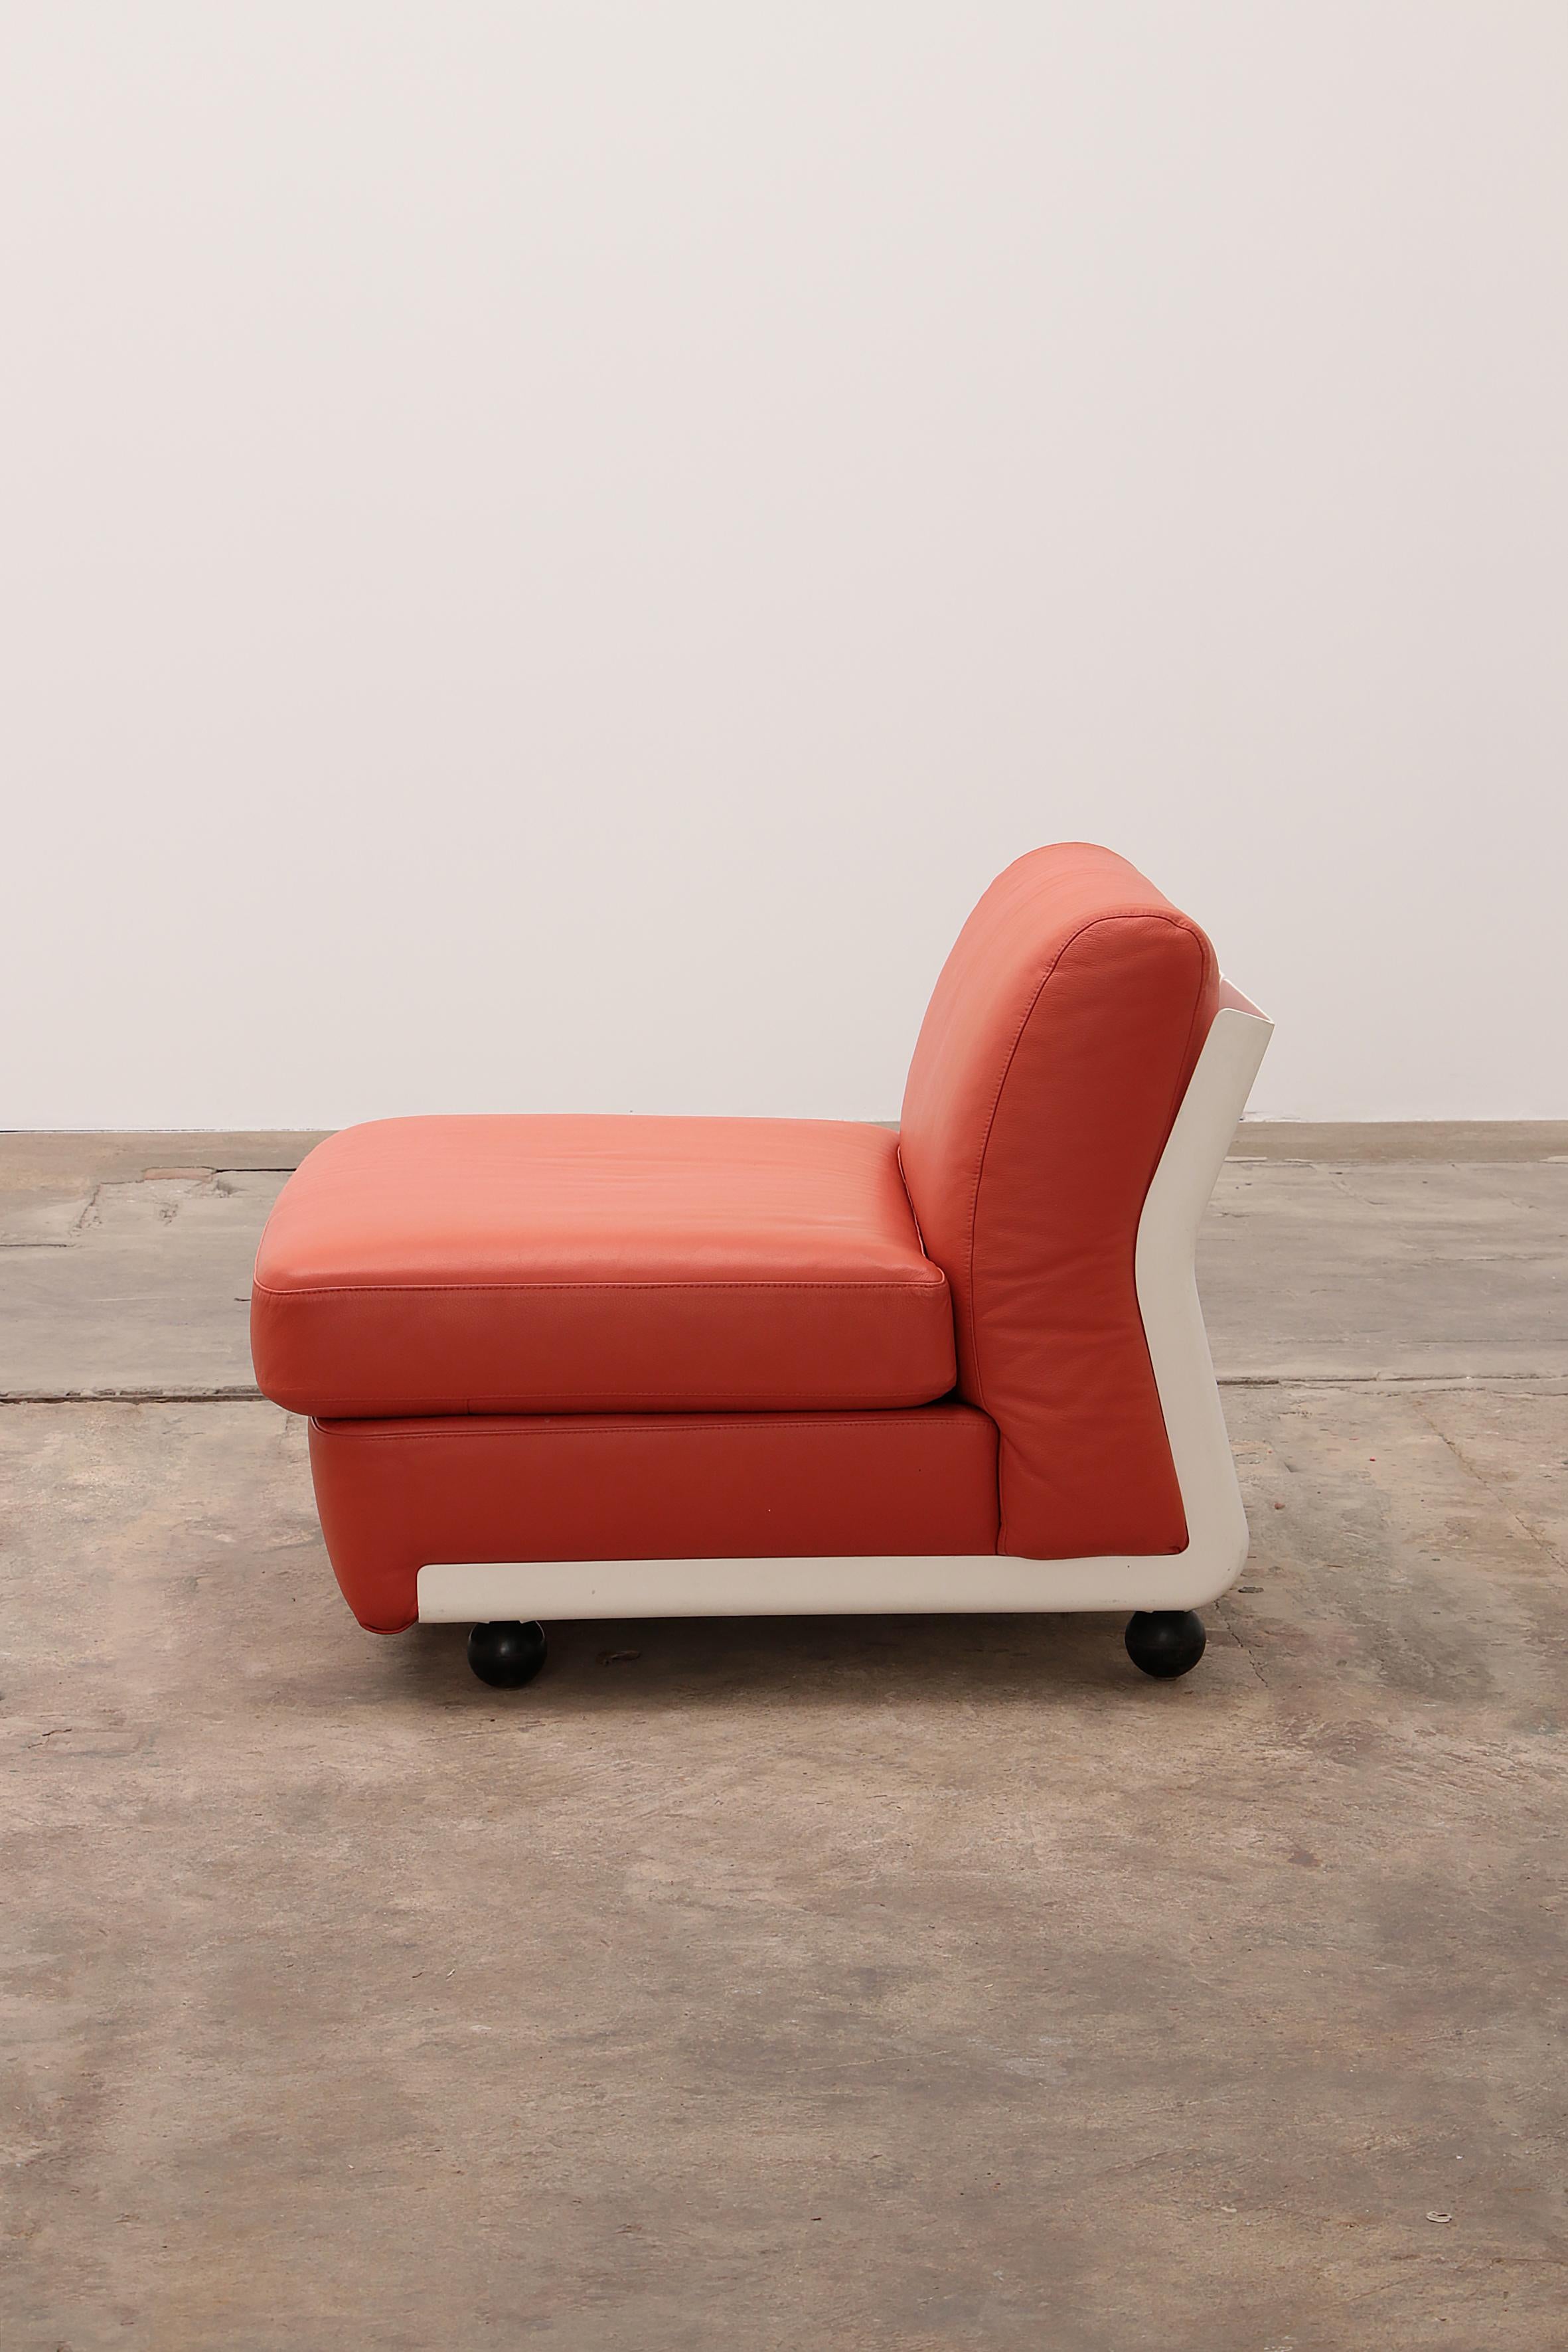 Mario Bellini Amanta Modular Sofa in Orange Leather for C&B Italy, 1960s For Sale 5